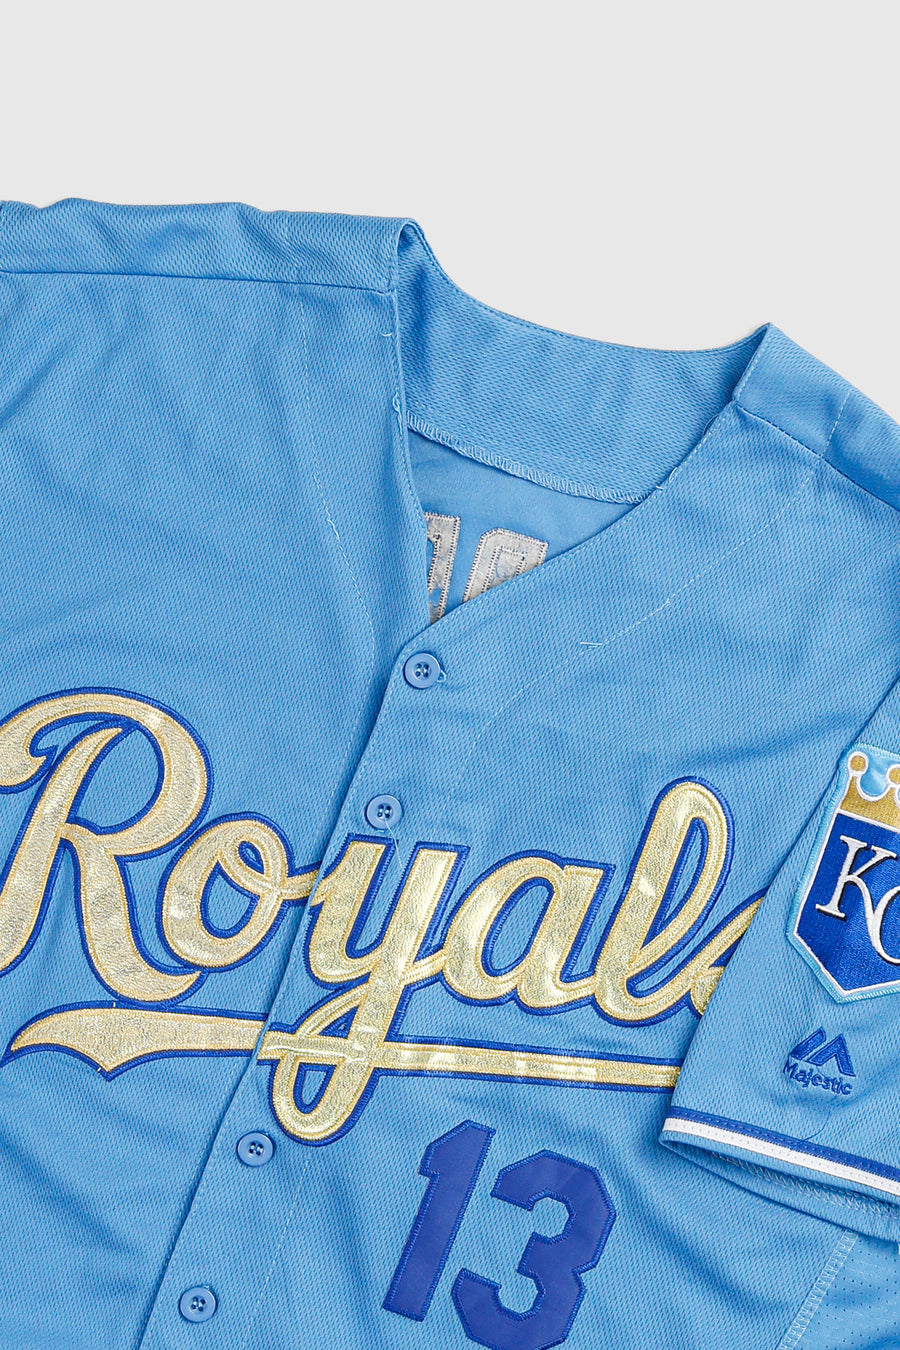 Vintage Kansas City Royals MLB Jersey - M